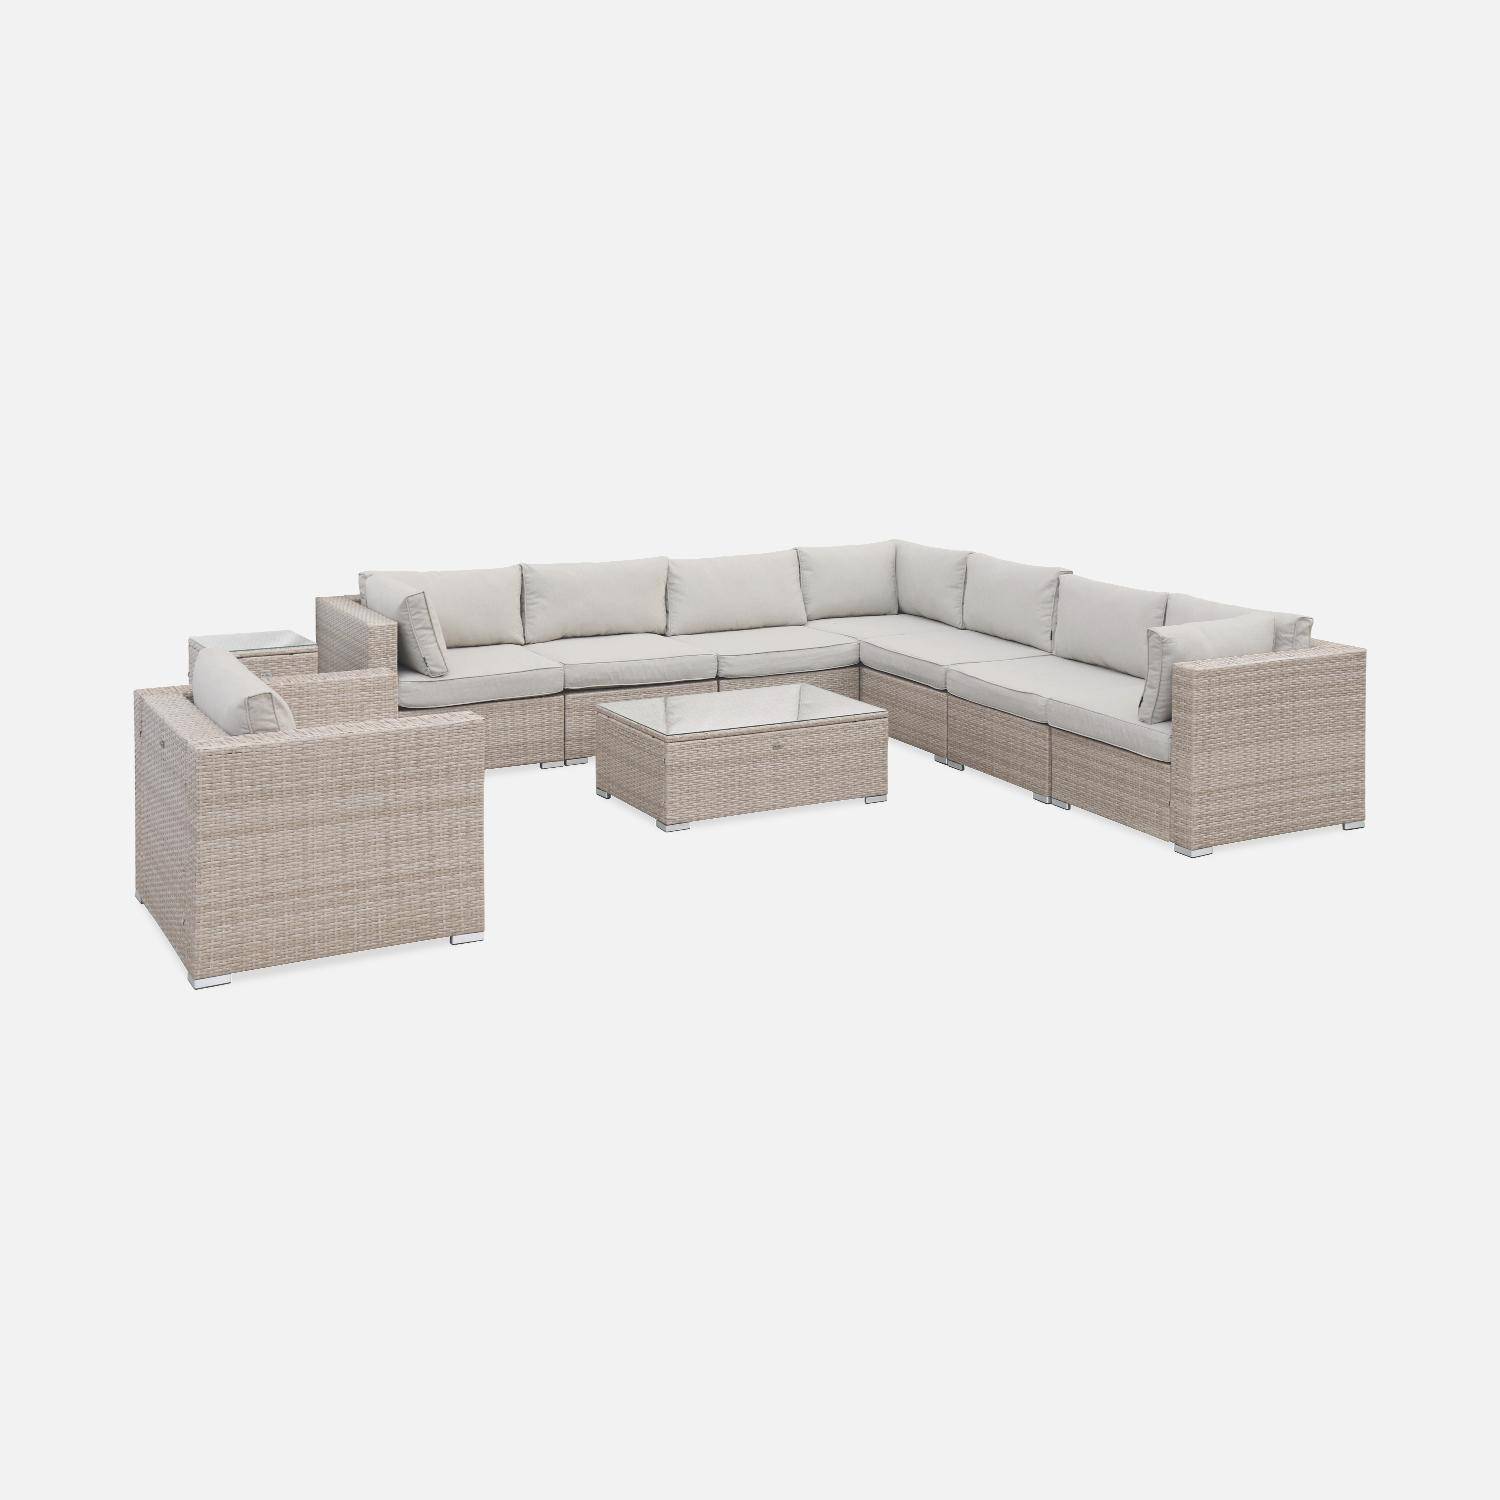 Sofa de jardin, conjunto sofa de exterior, rattan sintetico, resina trenzada - Beije, 8-10 plazas Photo3